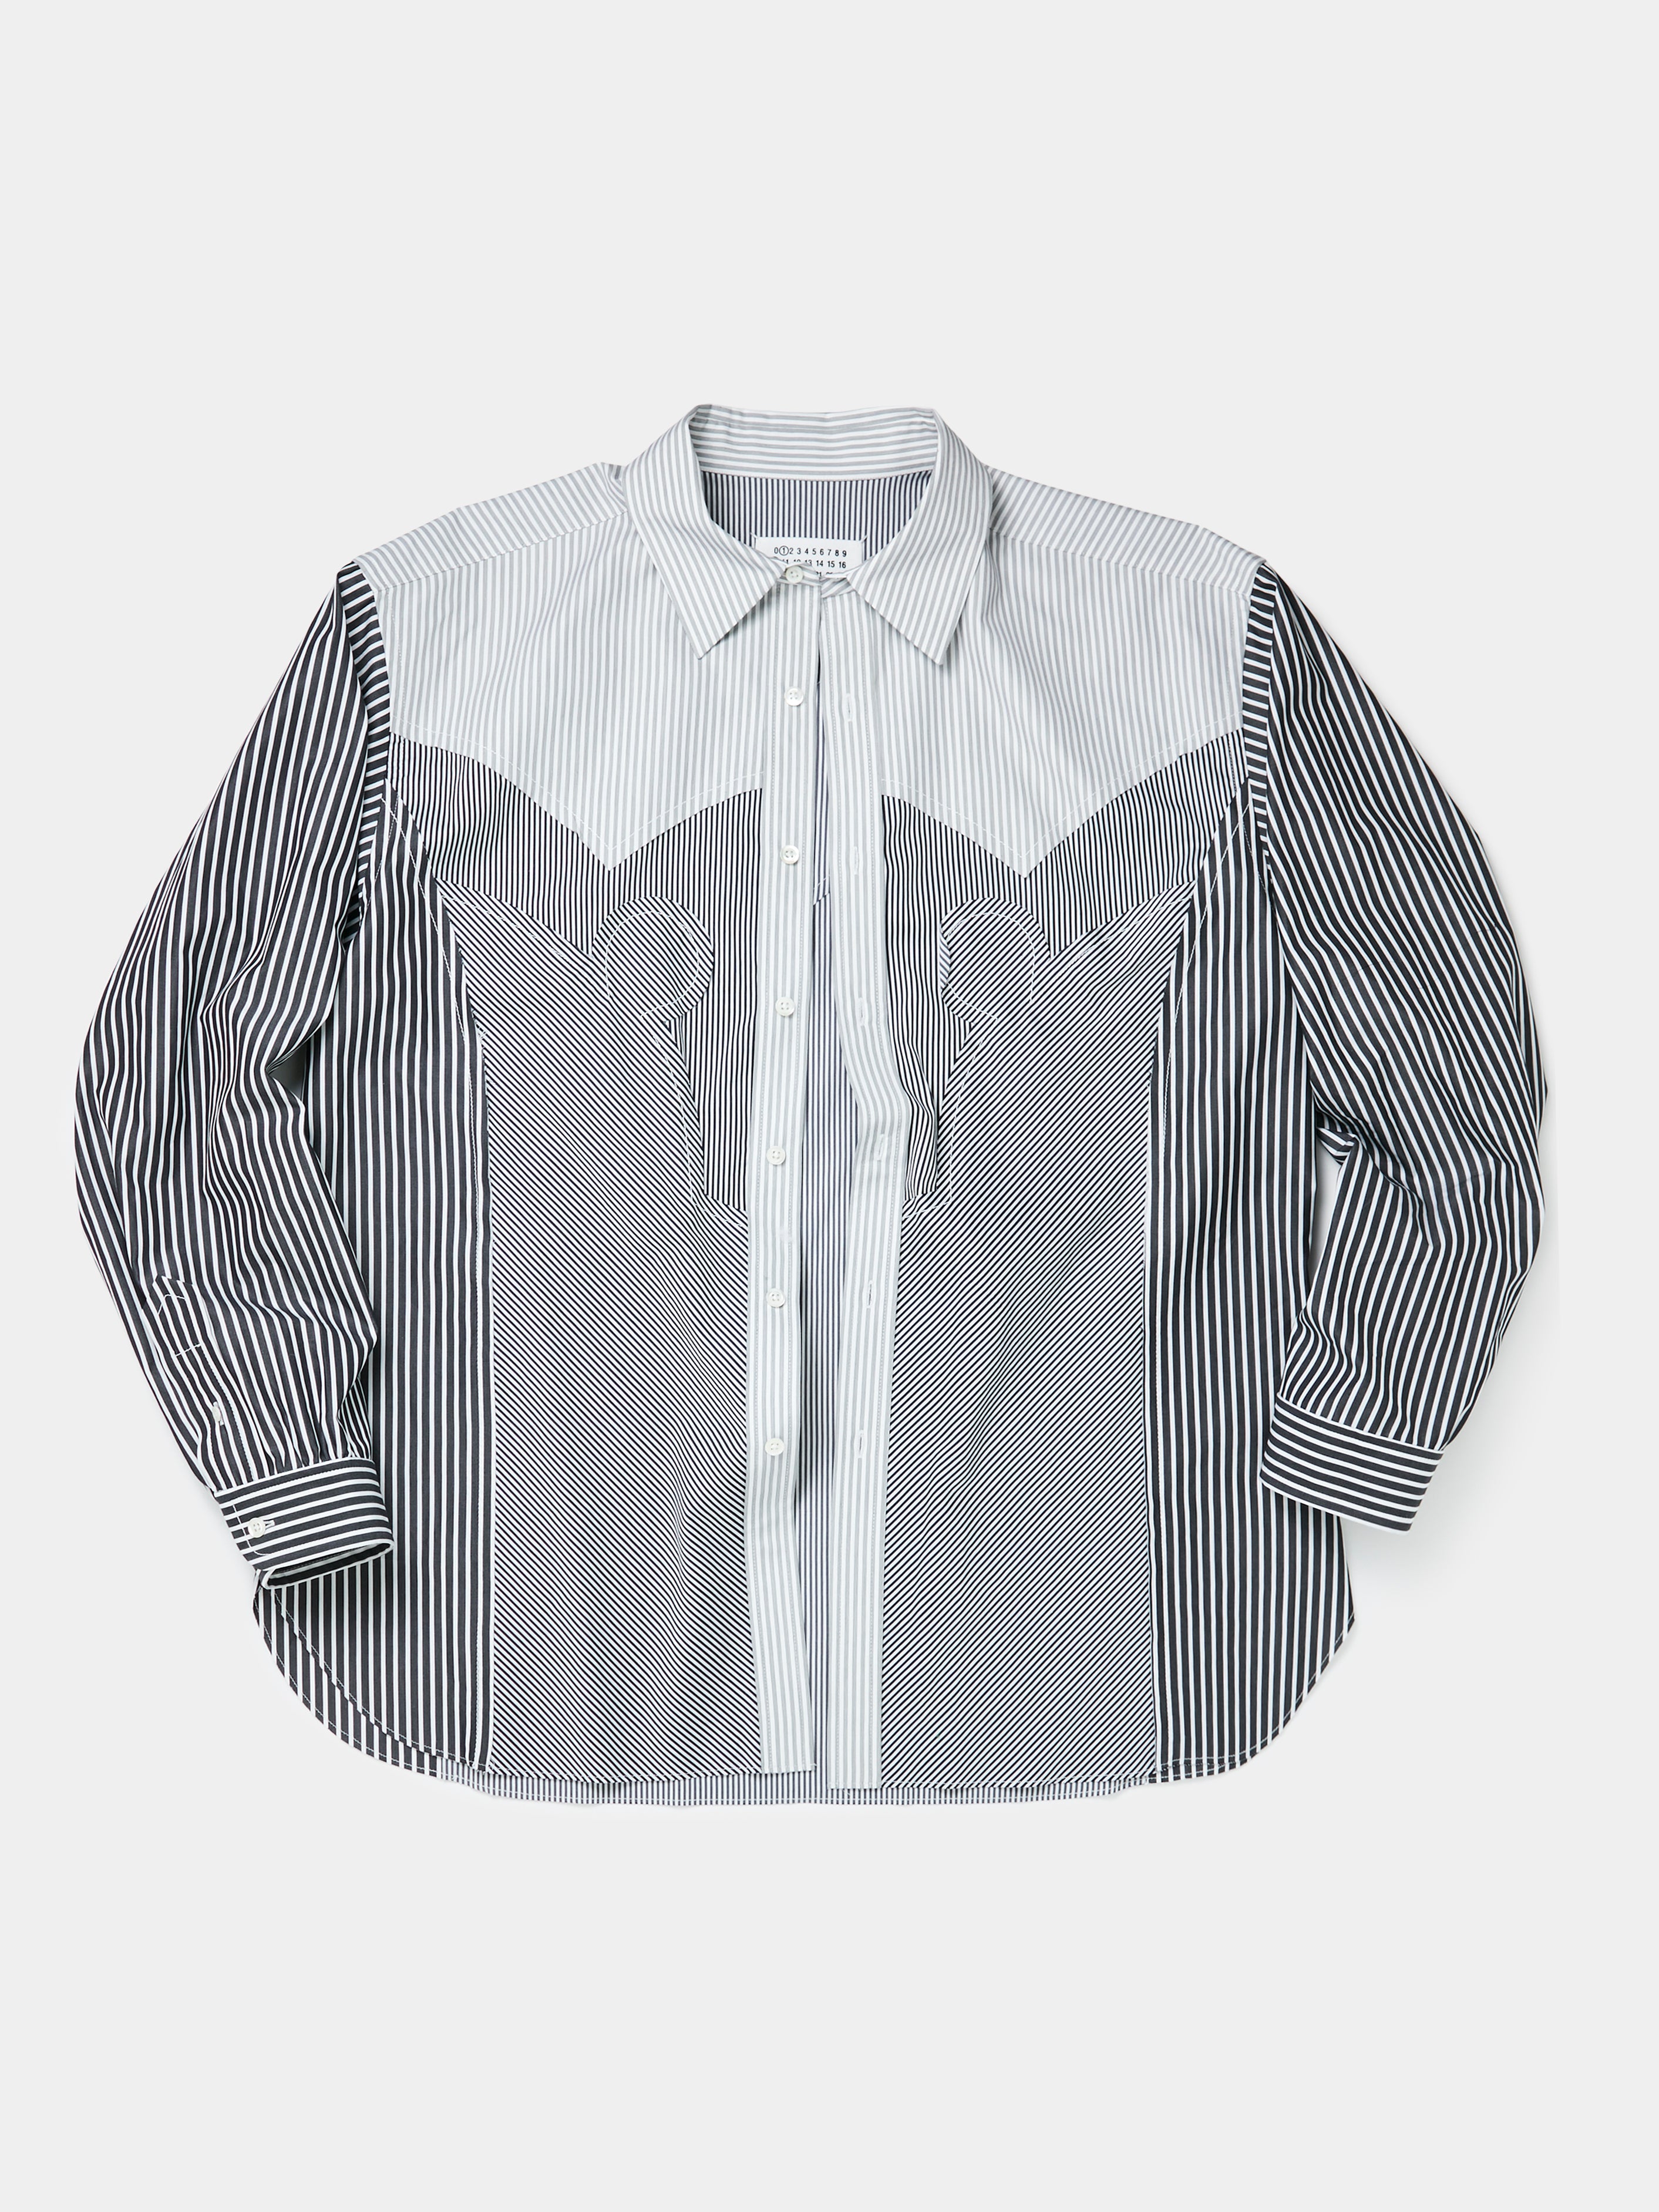 Classic Striped Shirt (Black/White)